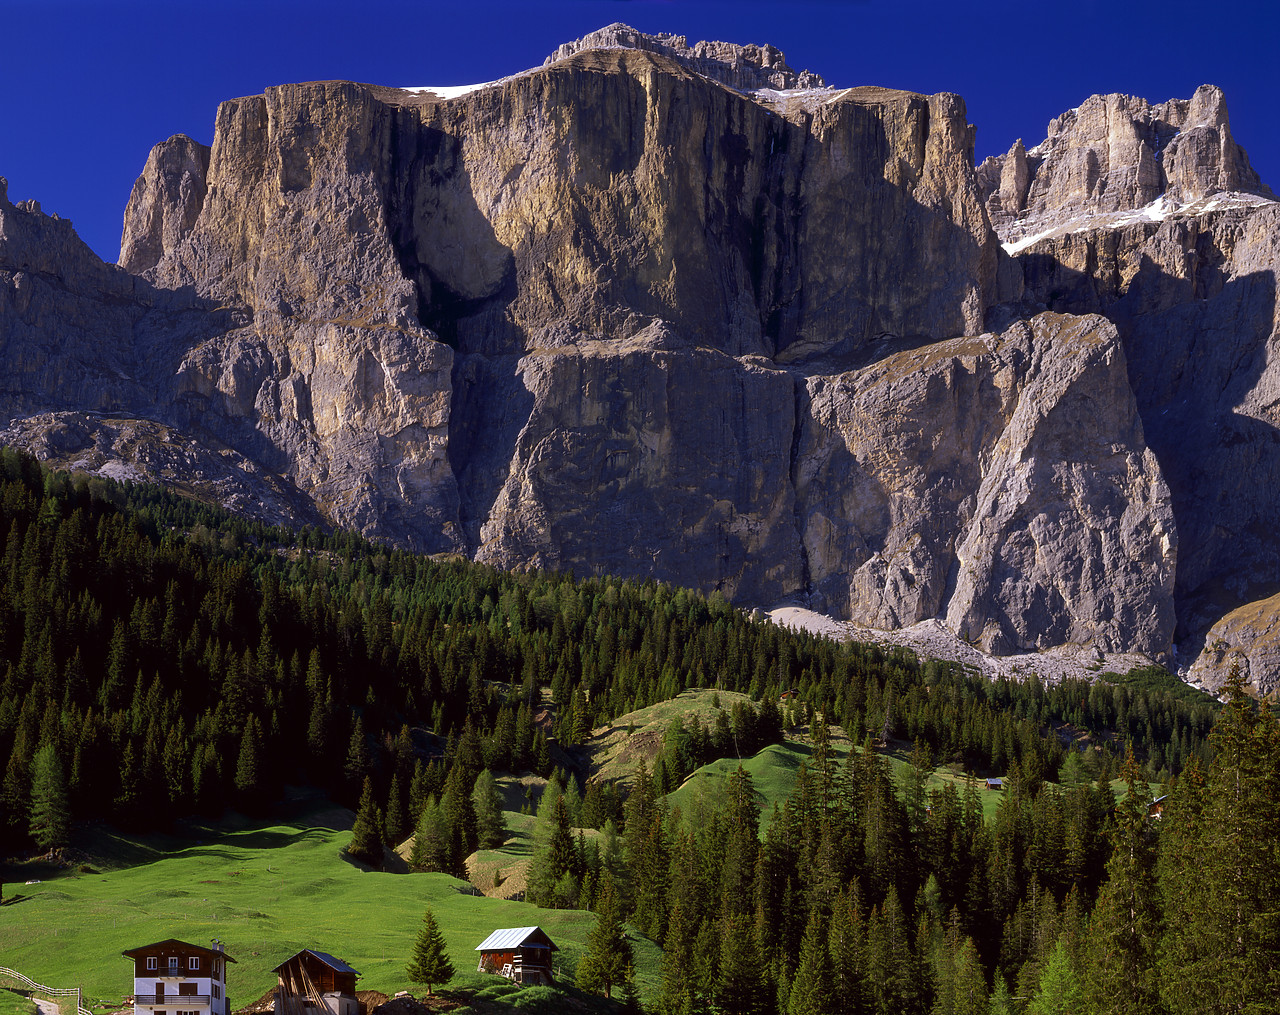 #970293-7 - The Dolomites, Italy